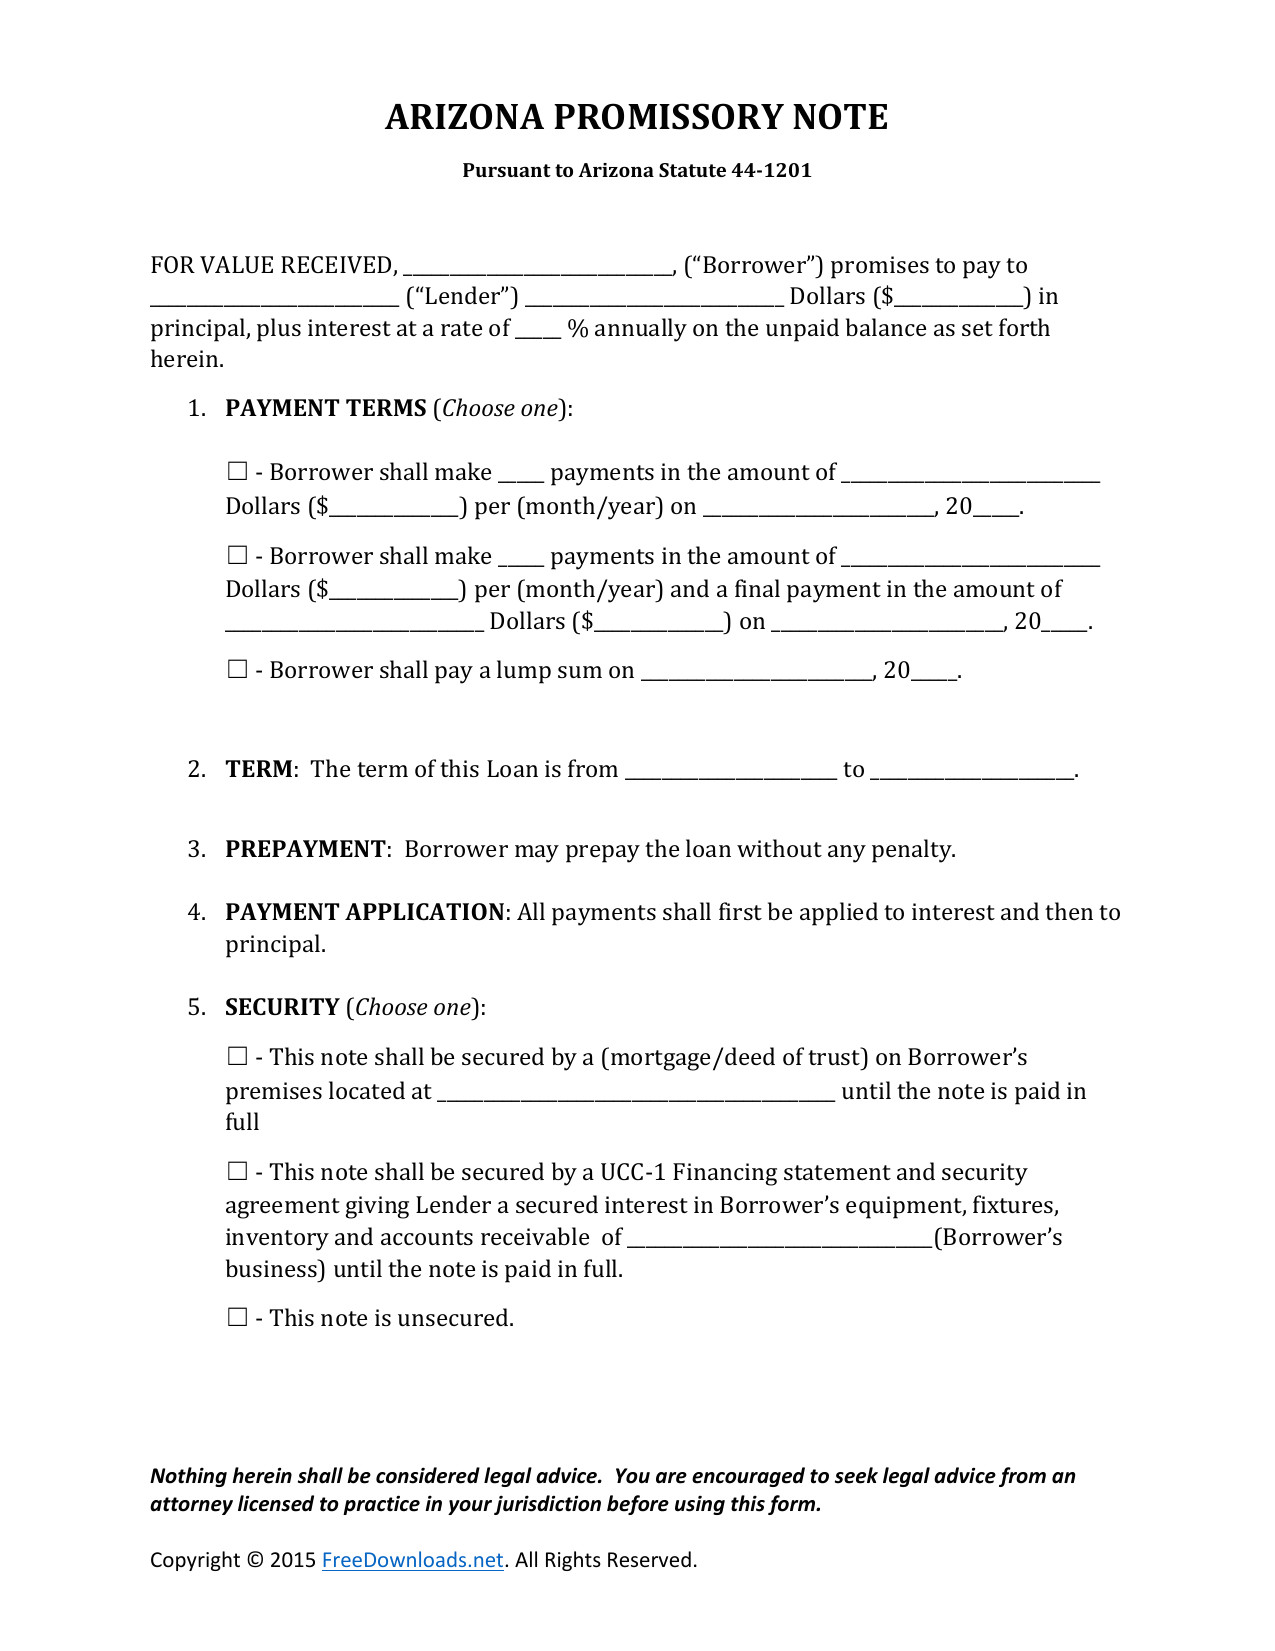 arizona promissory note form